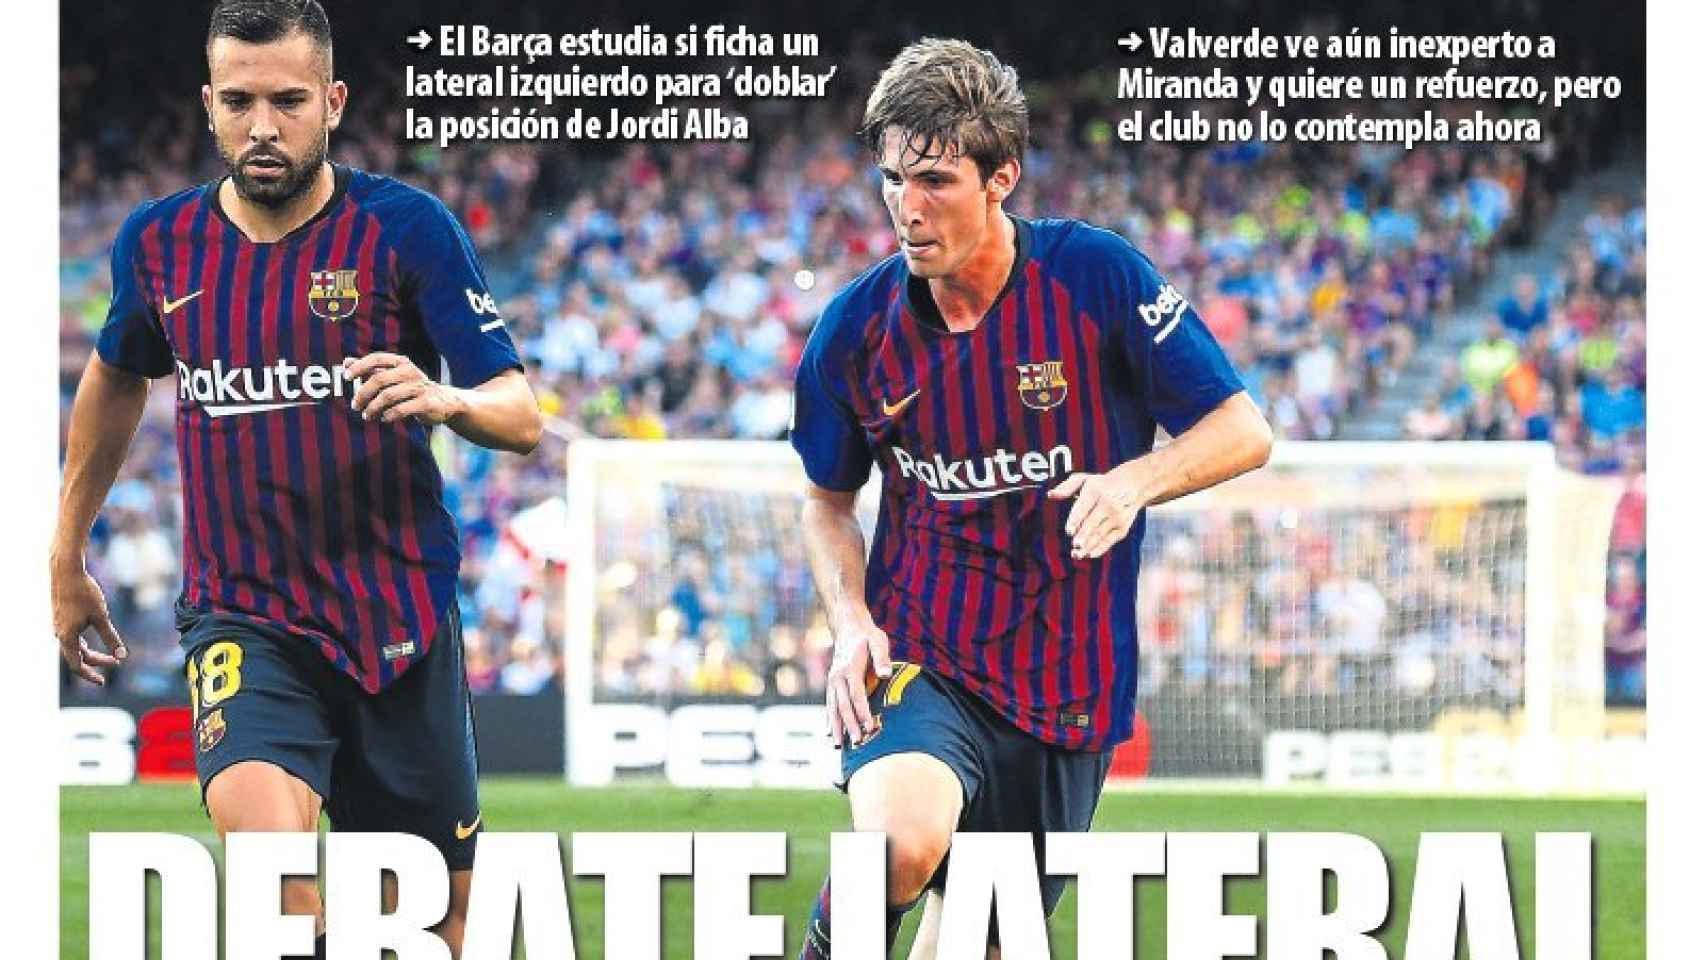 La portada del diario Mundo Deportivo (10/09/2018)1706 x 960